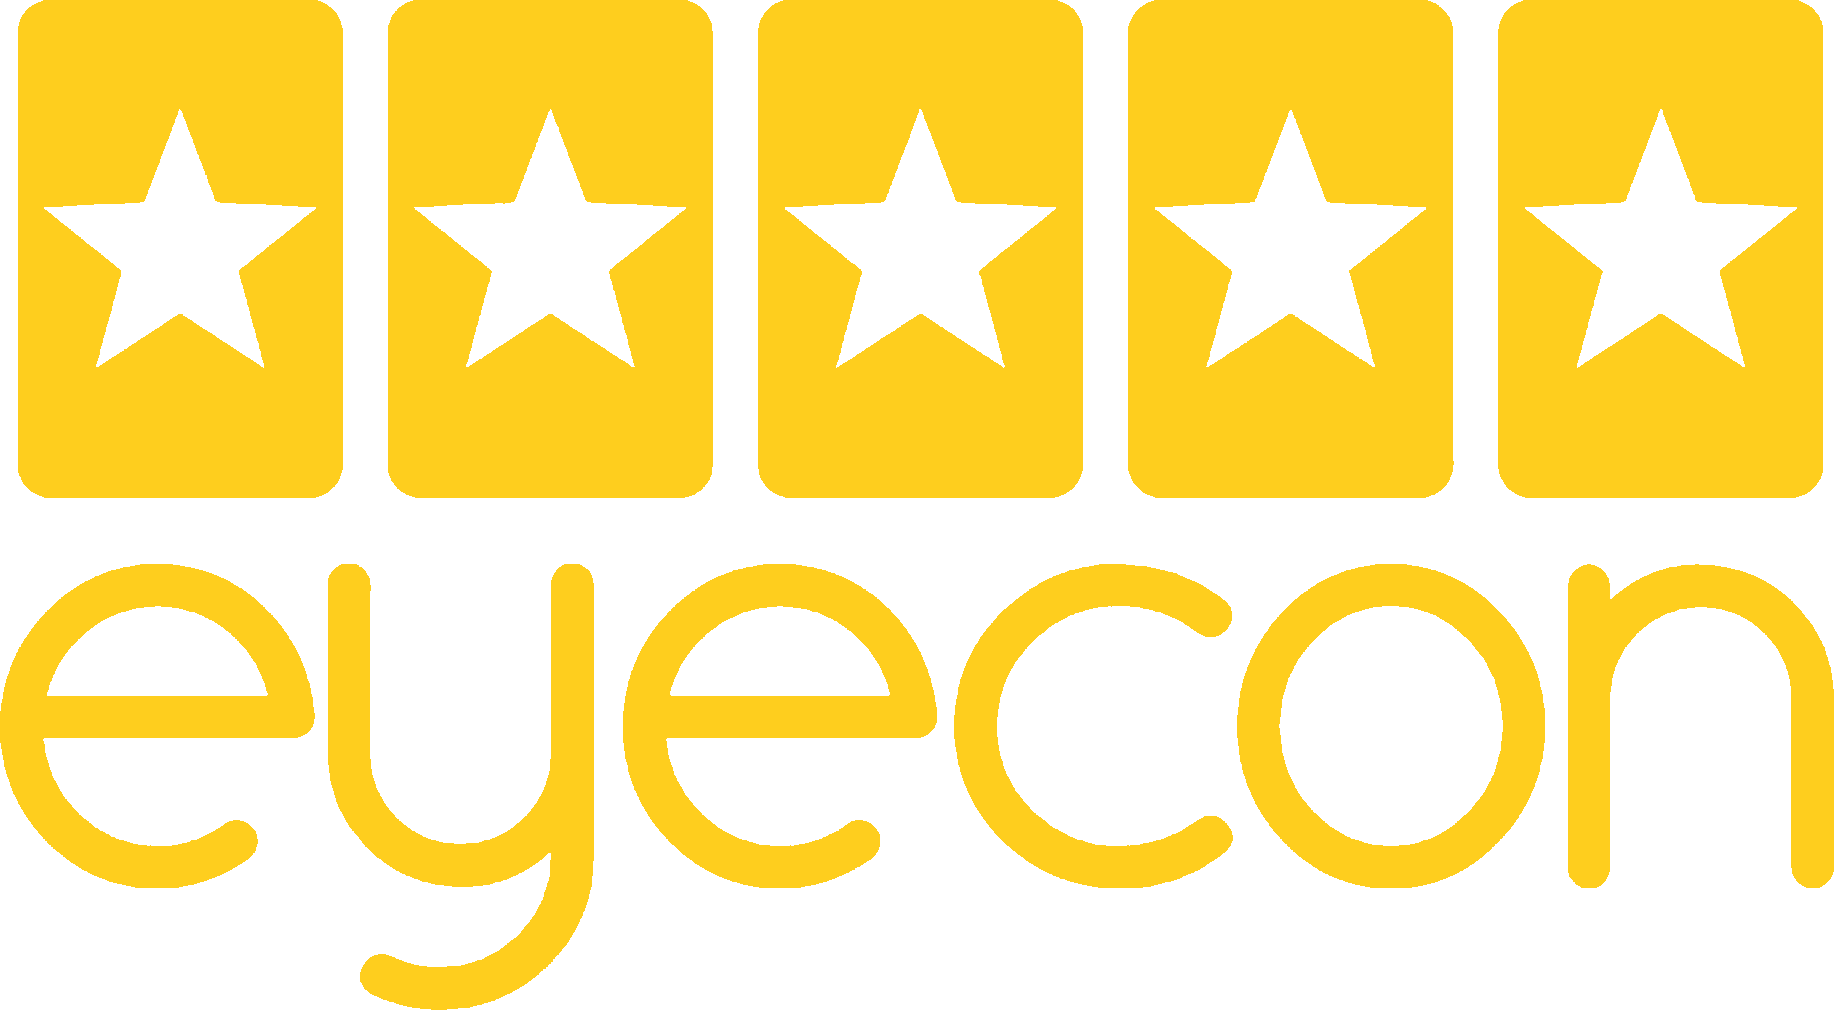 logo eyecon 